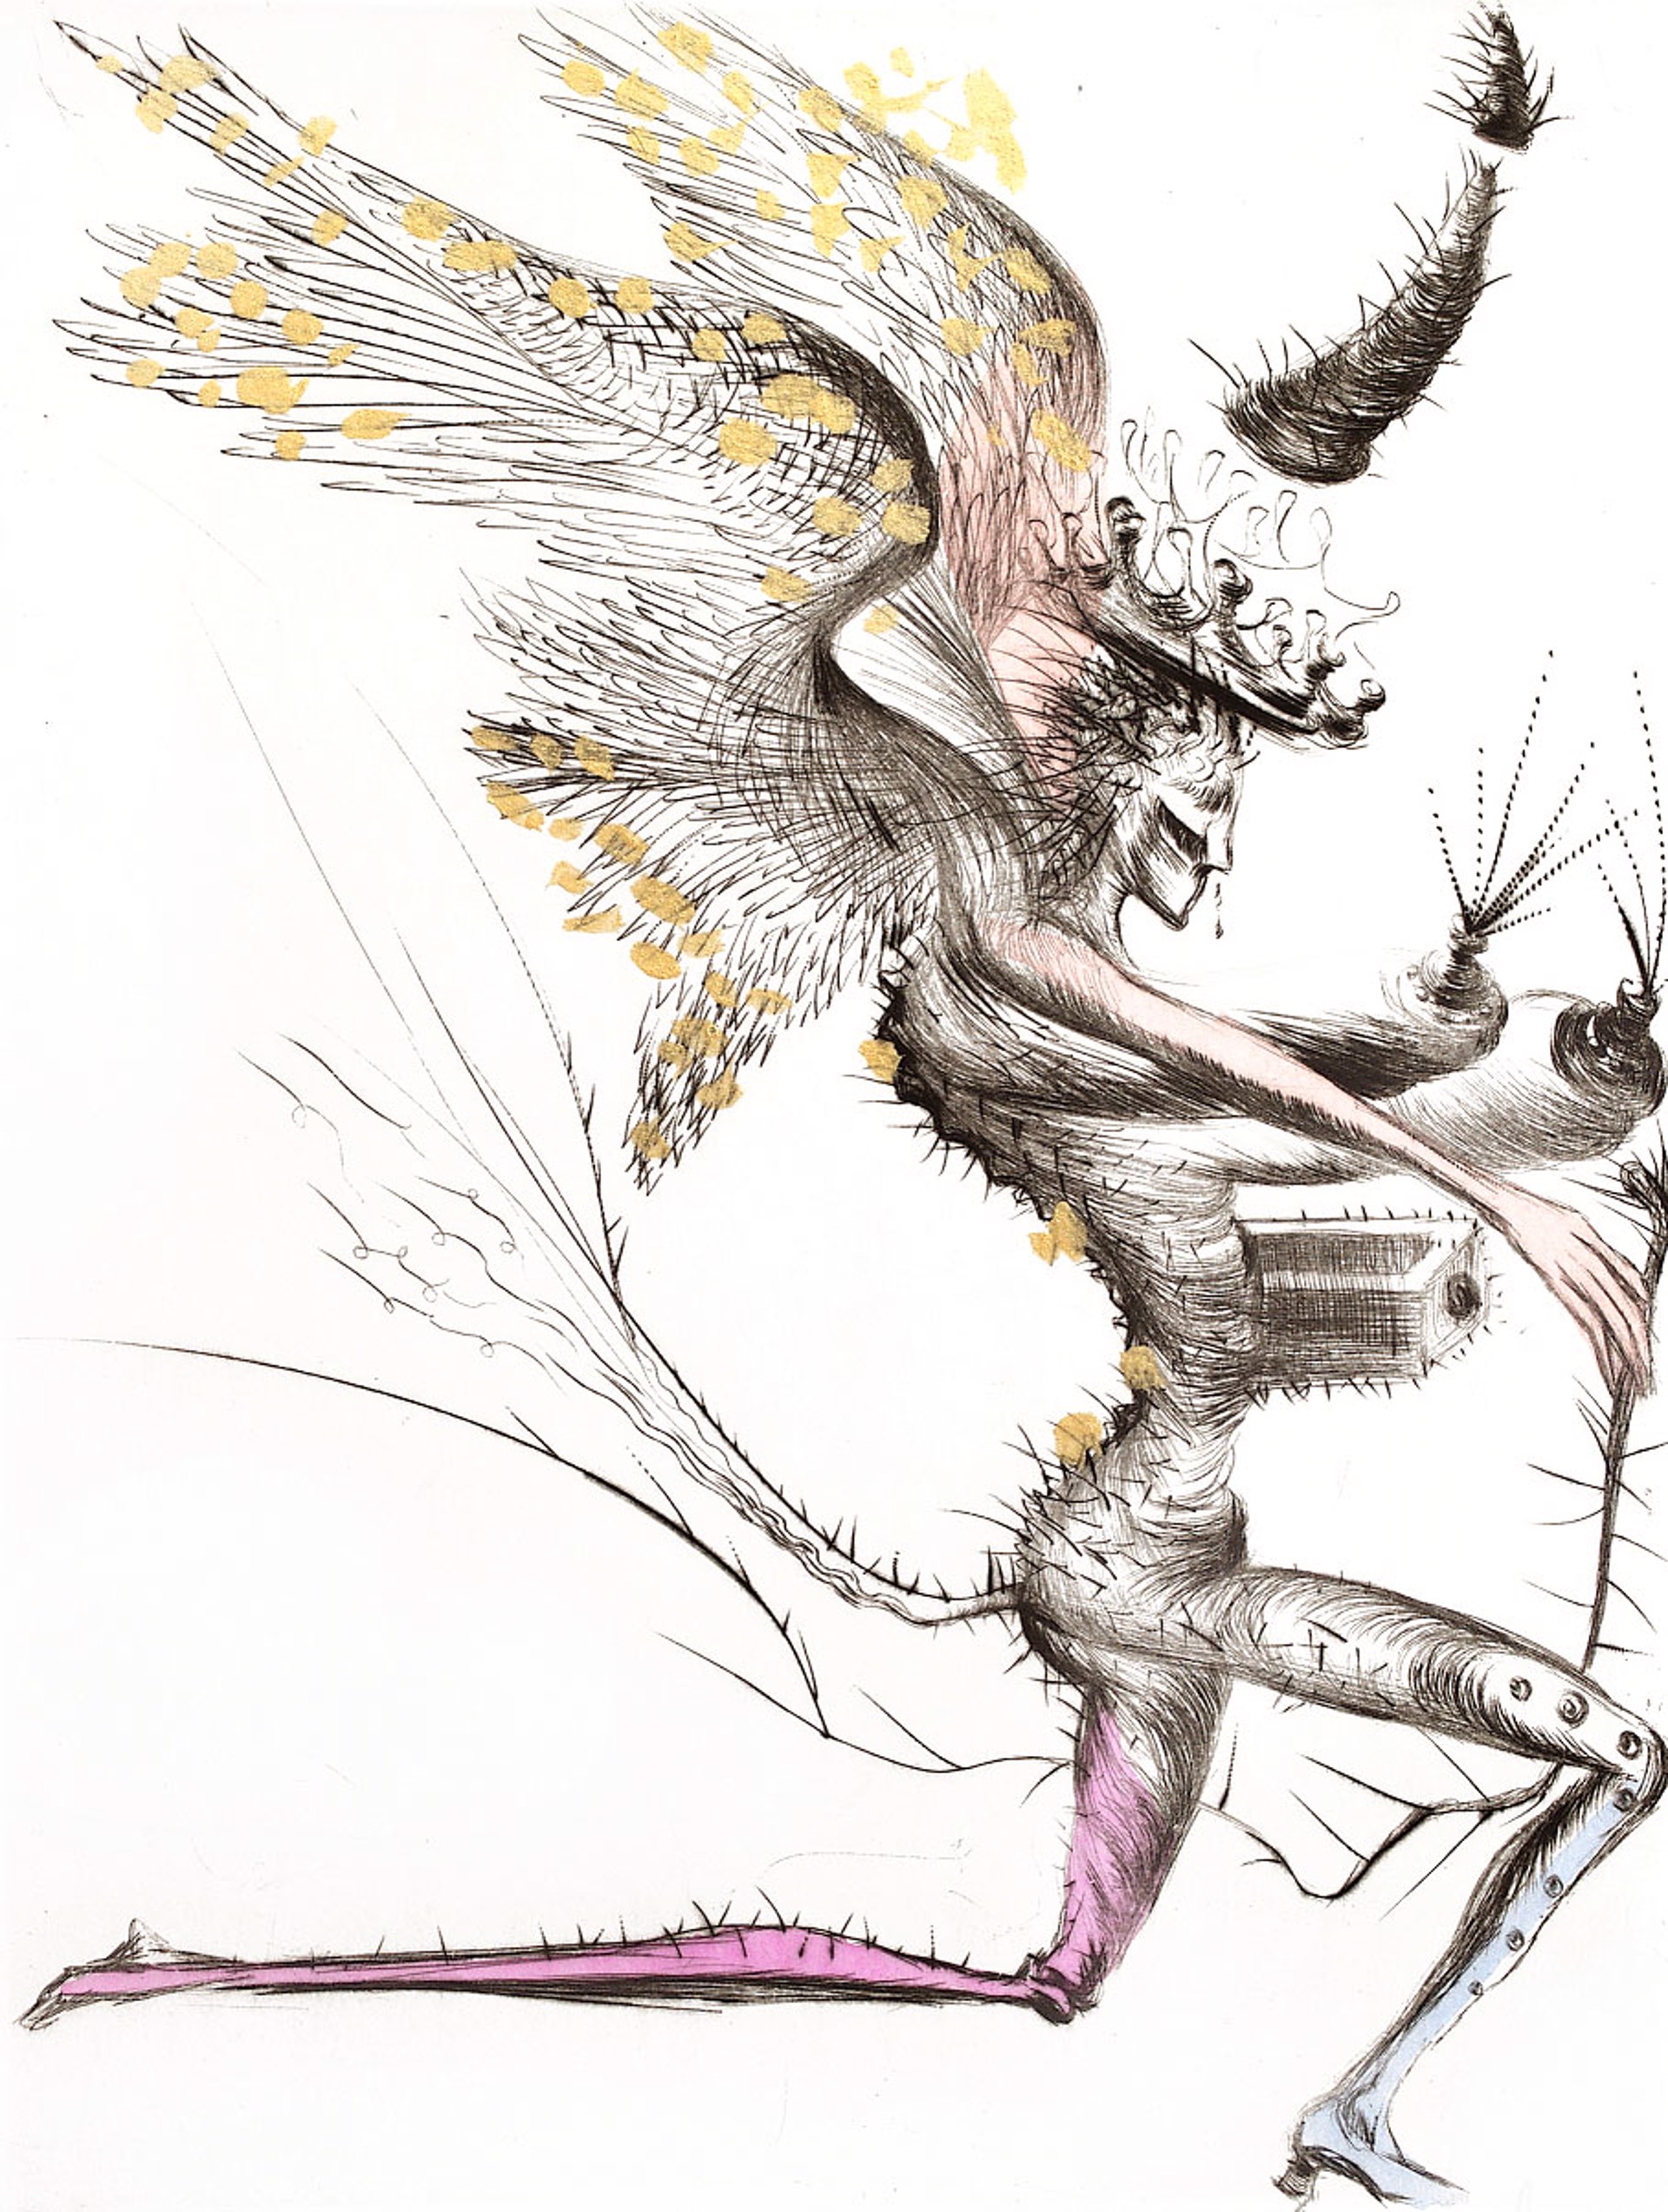 Venus in Furs  "Winged Demon" by Salvador Dali